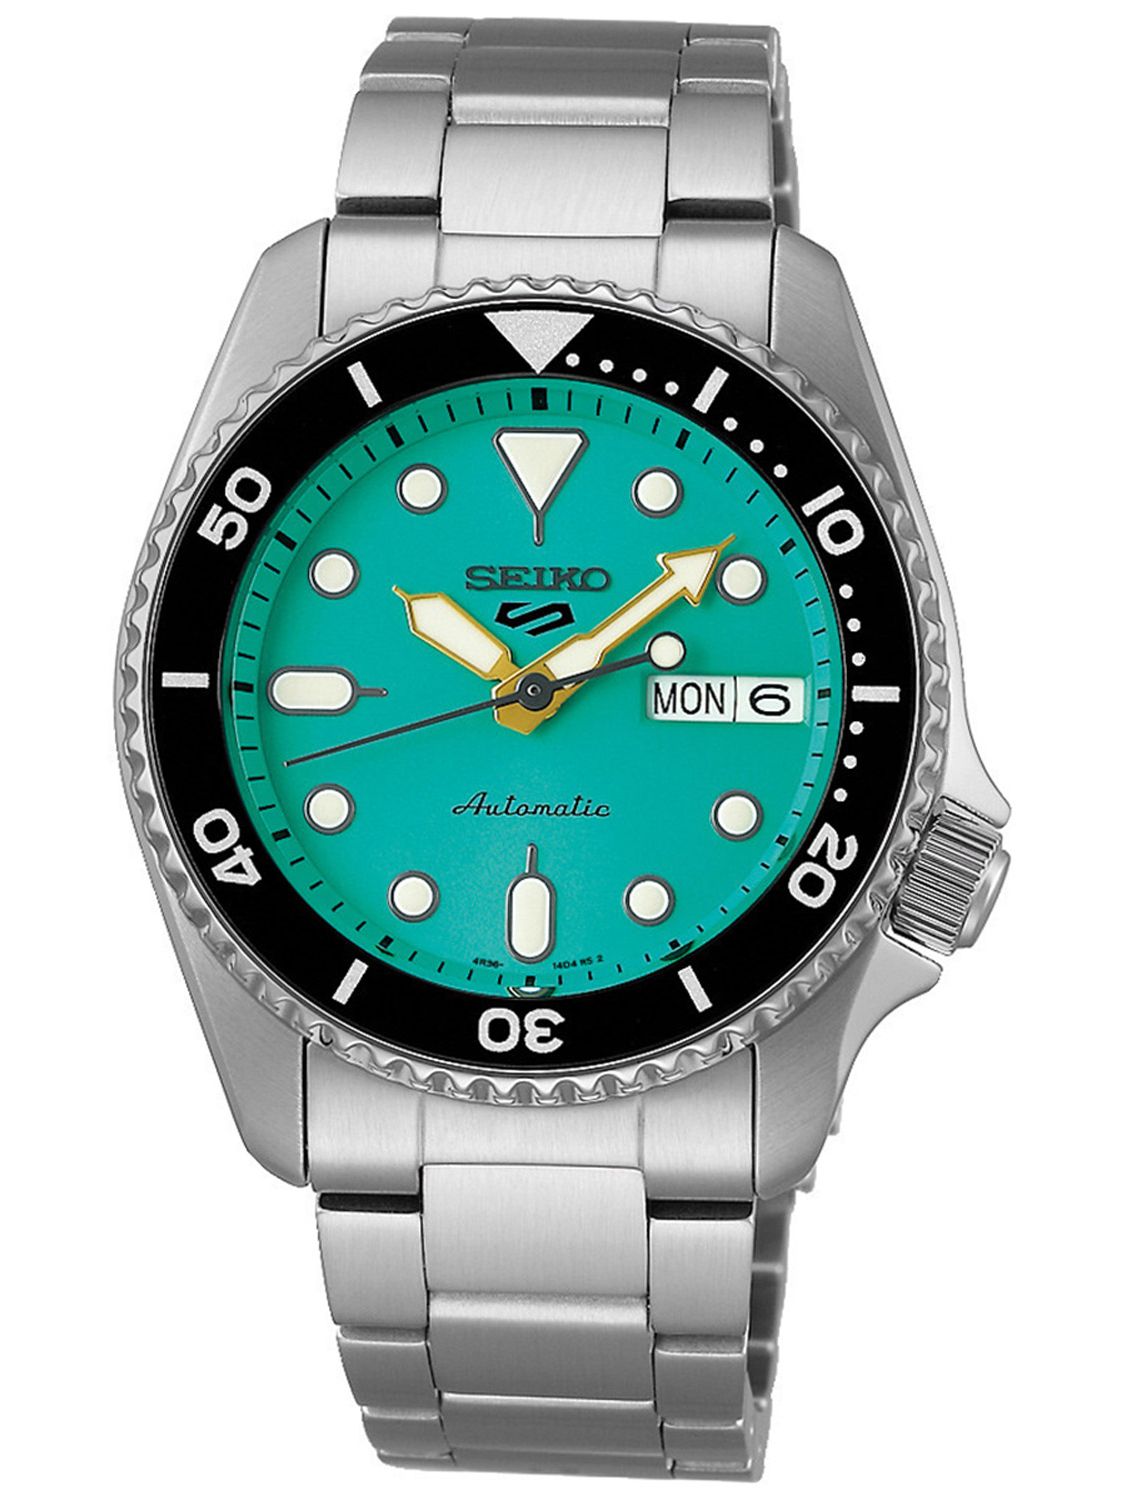 Seiko SRPK33K1 5 Sports Watch Automatic Unisex uhrcenter Steel/Turquoise •